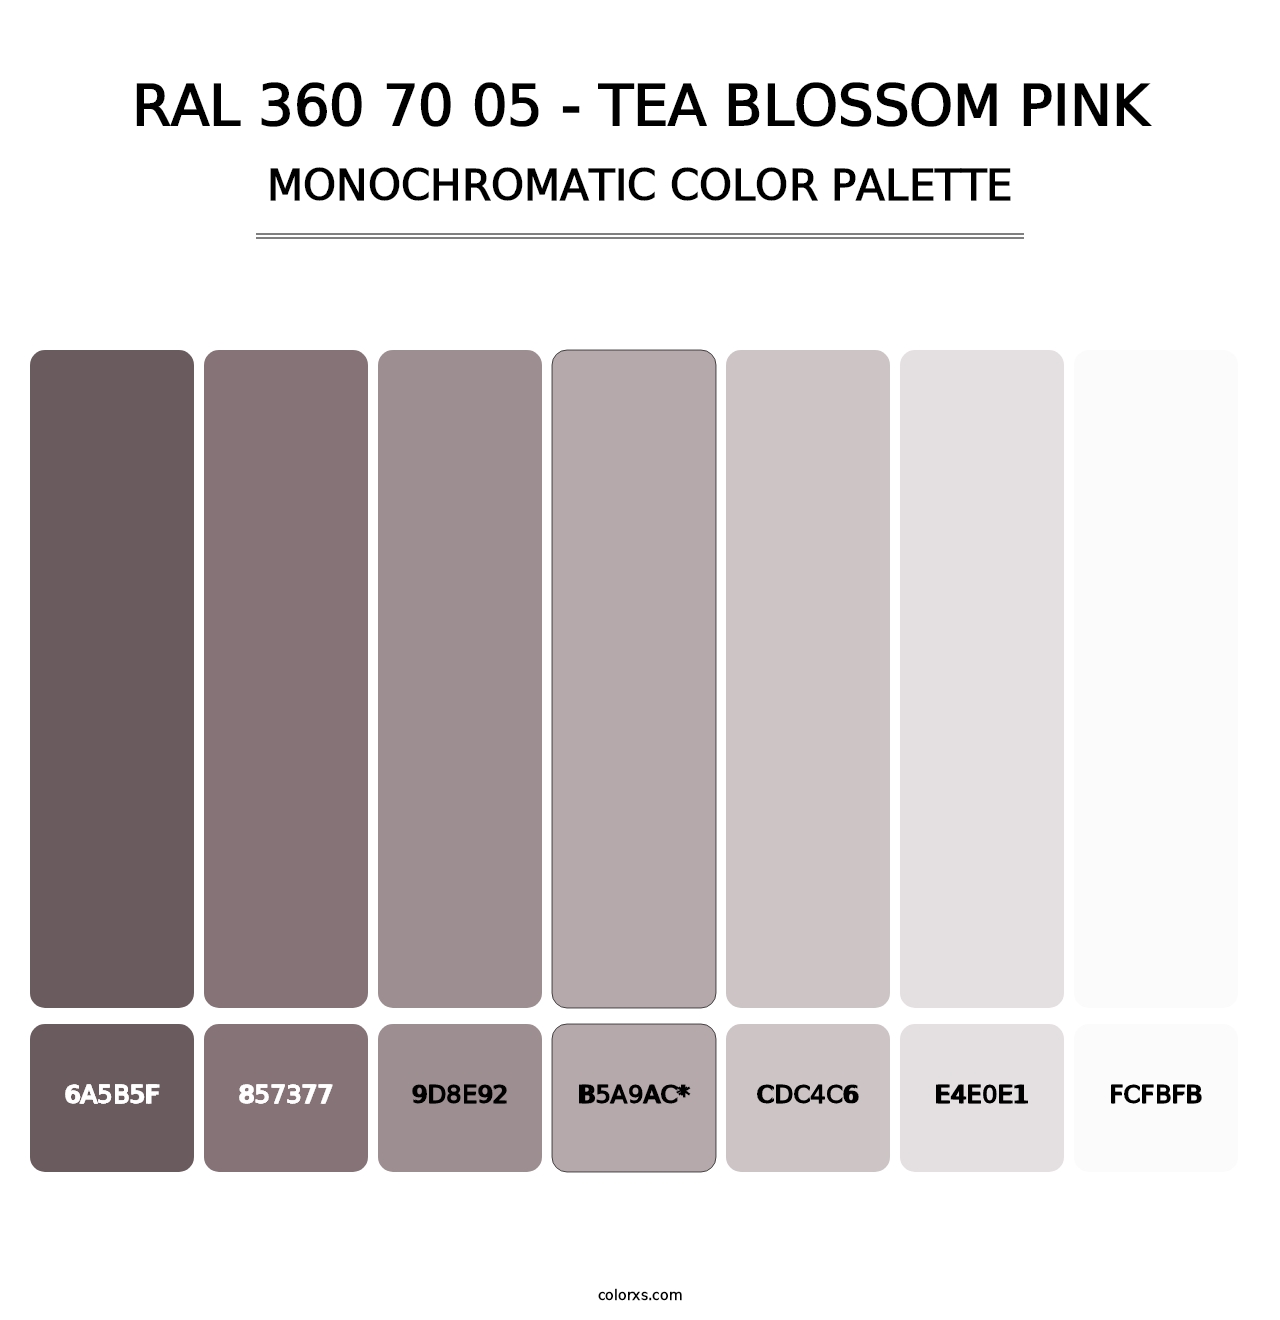 RAL 360 70 05 - Tea Blossom Pink - Monochromatic Color Palette